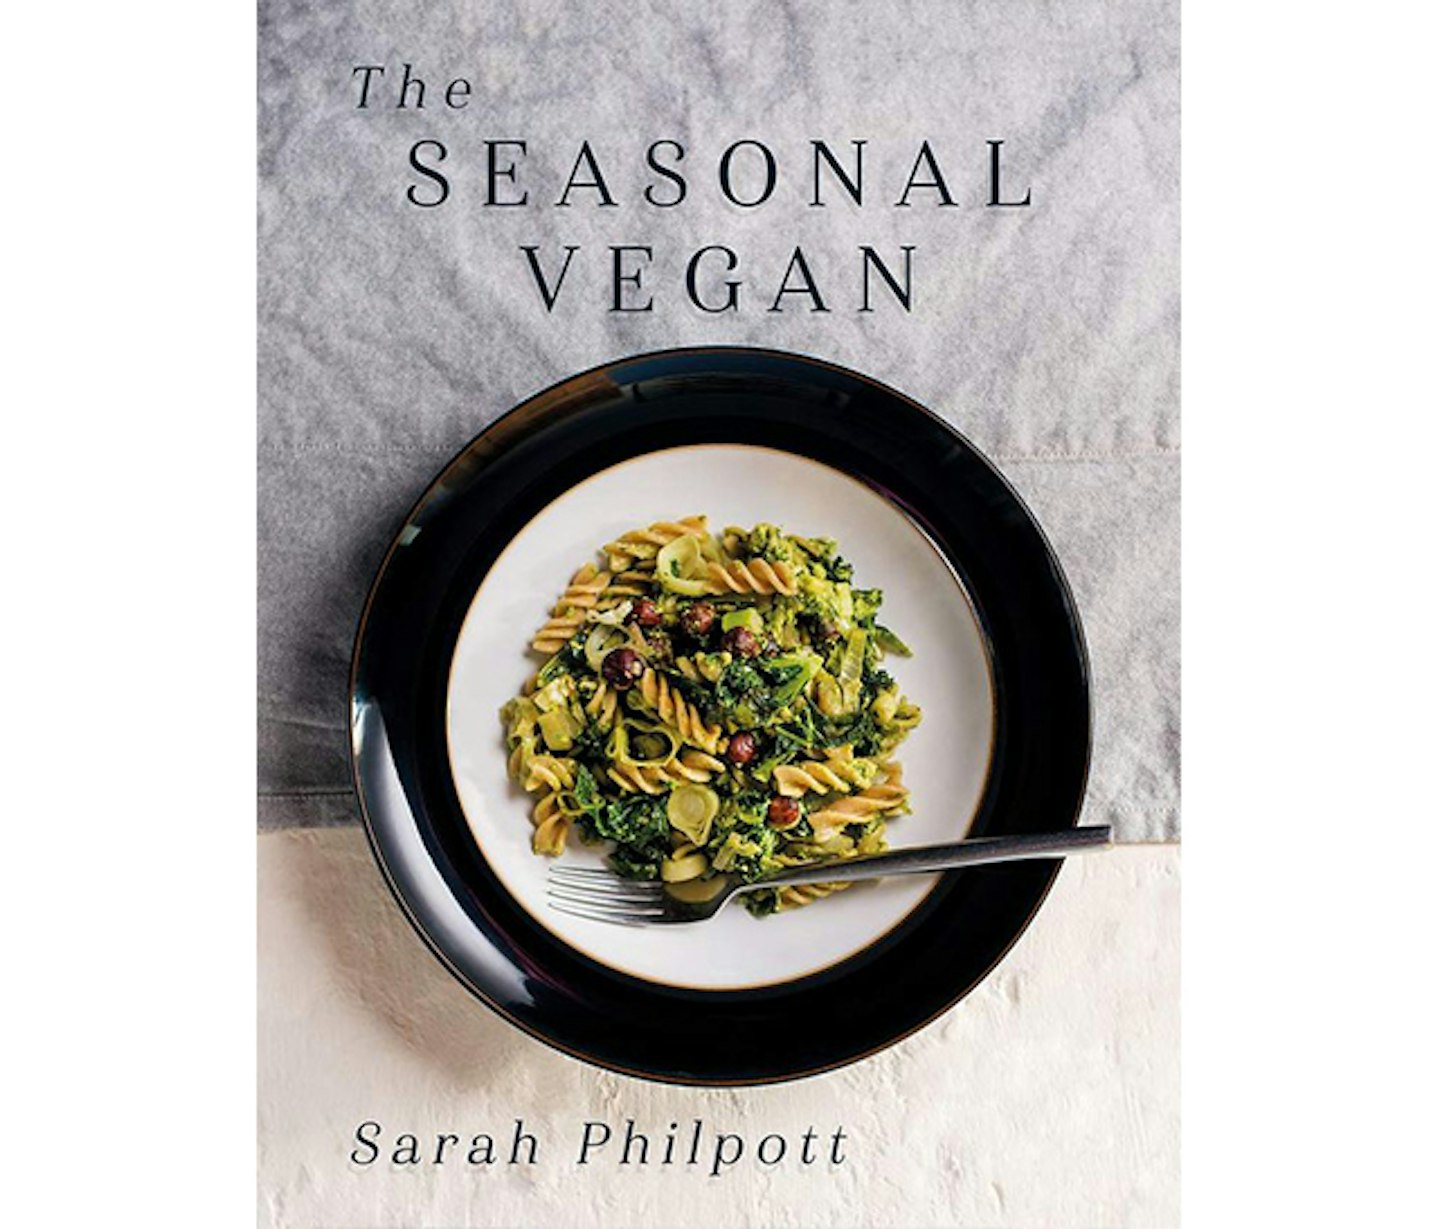 u2018The Seasonal Veganu2019 by Sarah Philpott